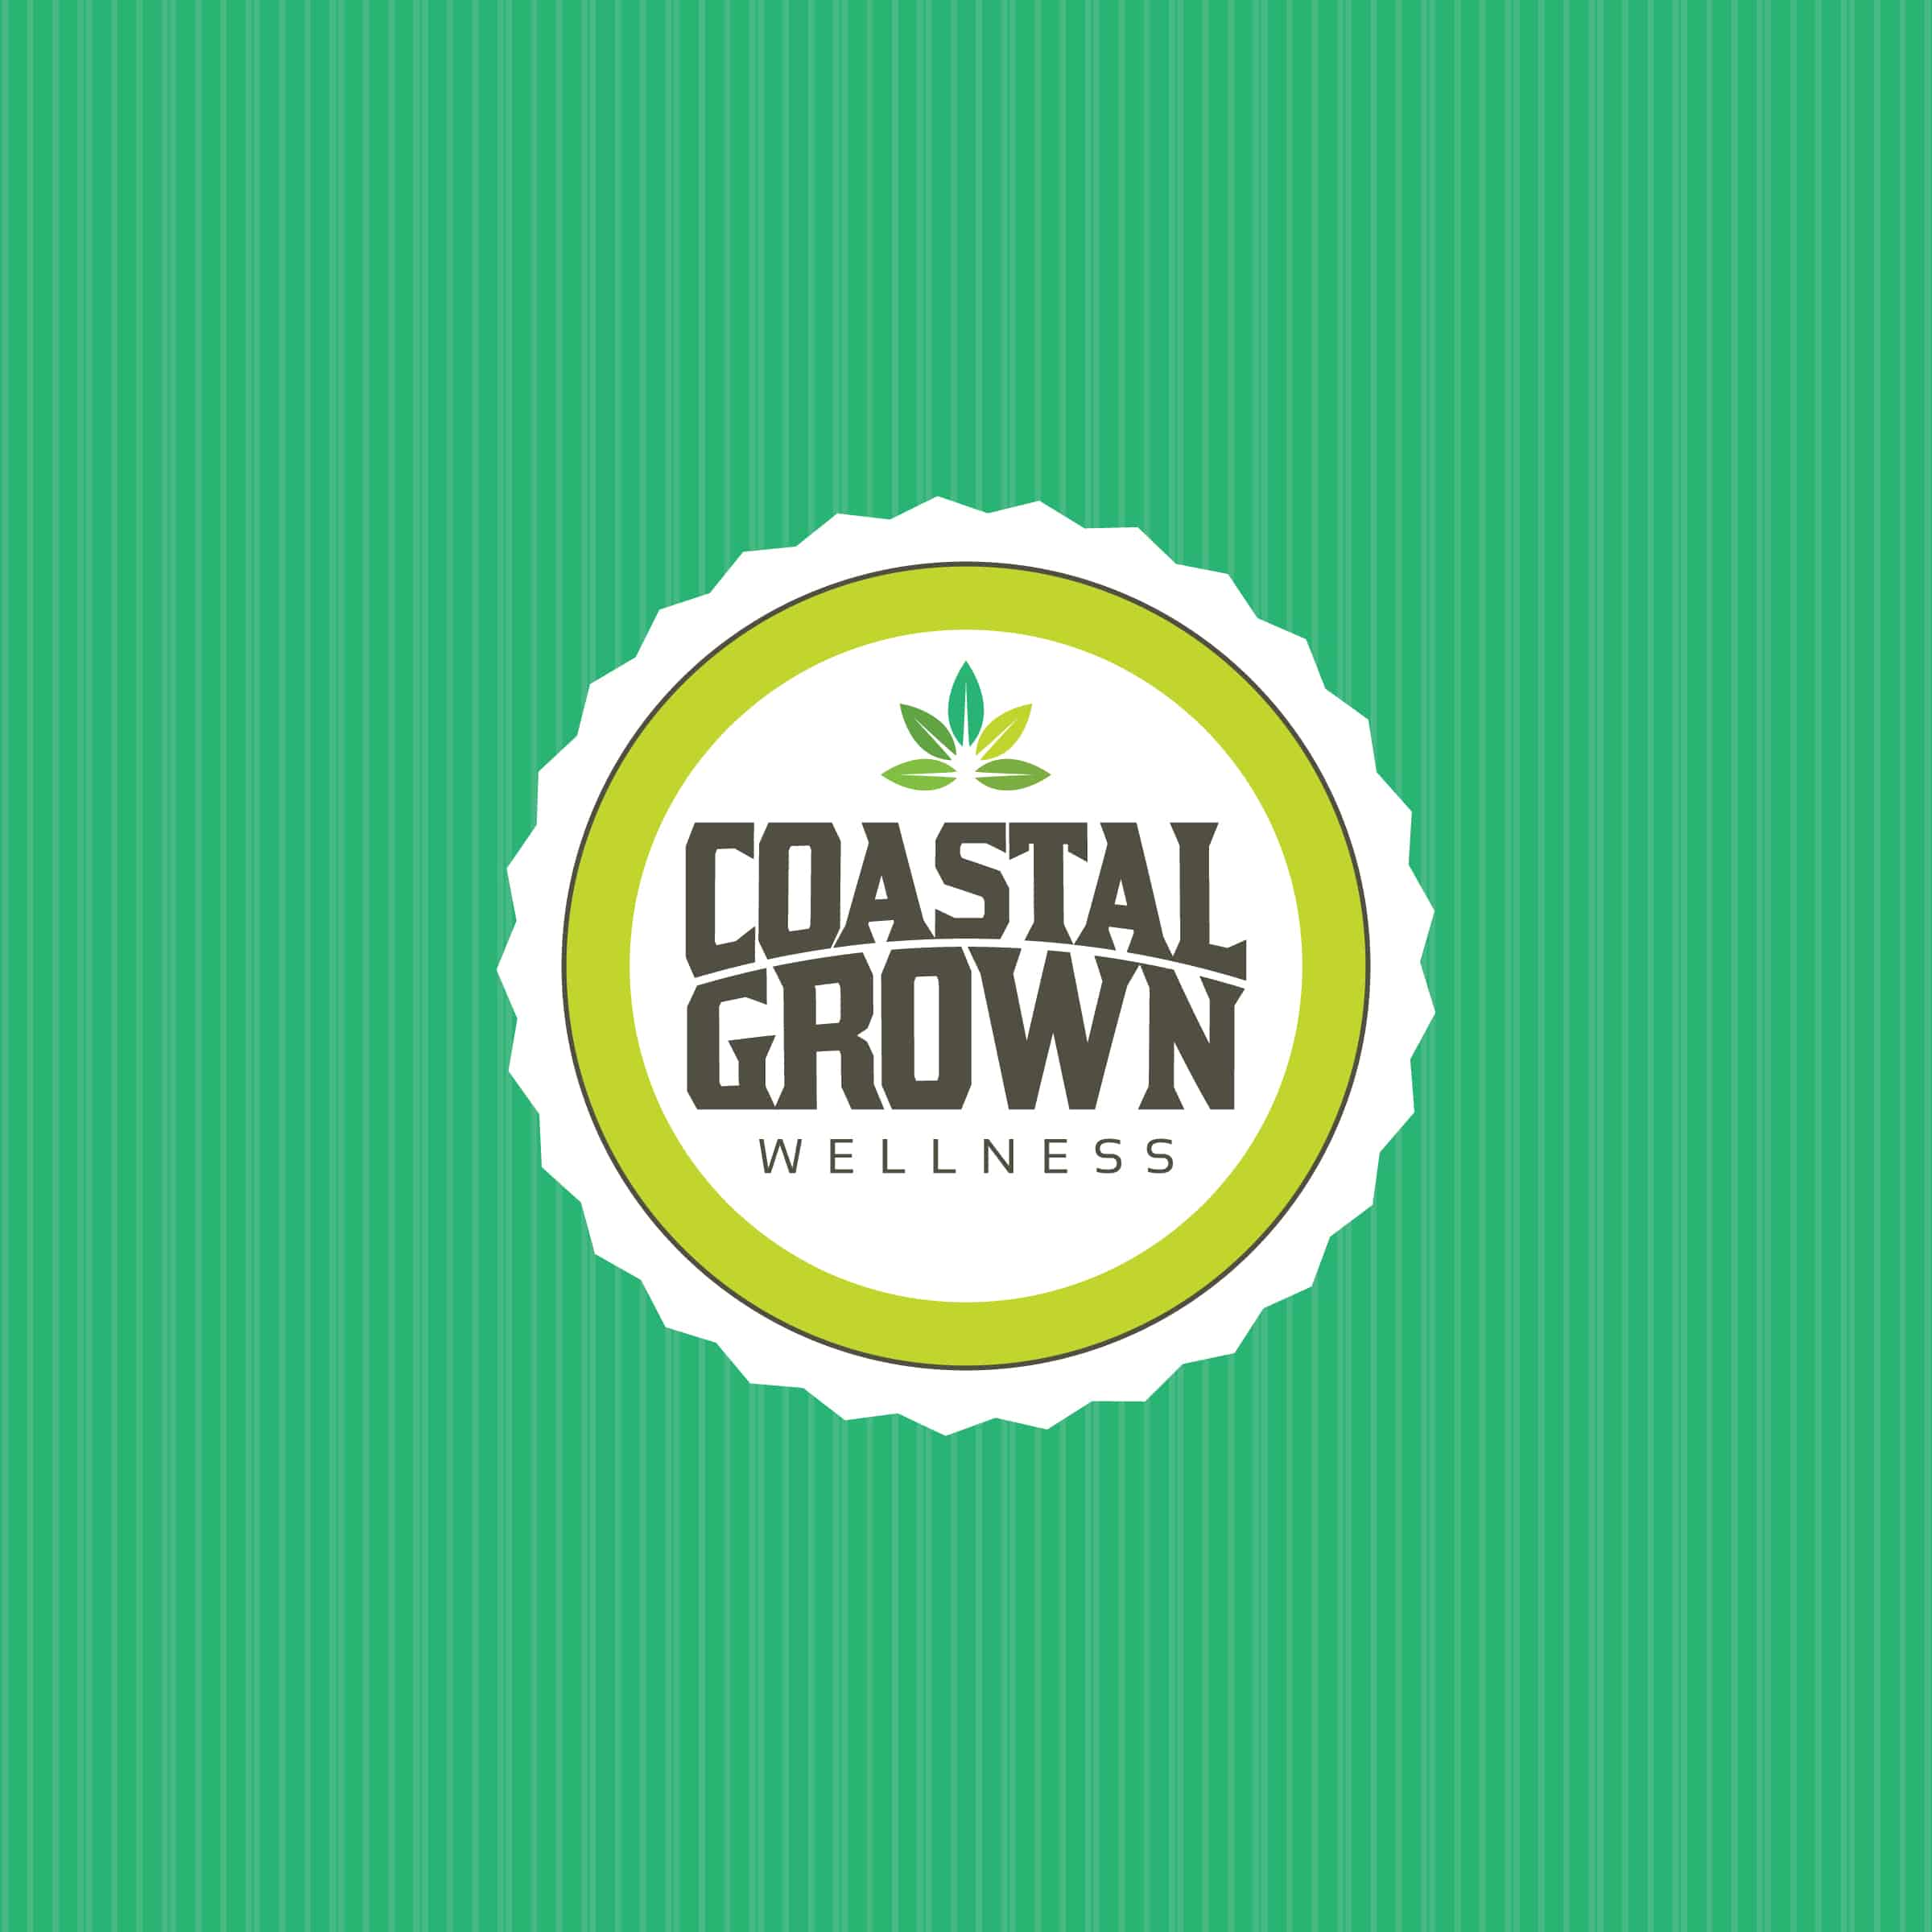 Logo Design for Coastal Grown Wellness.